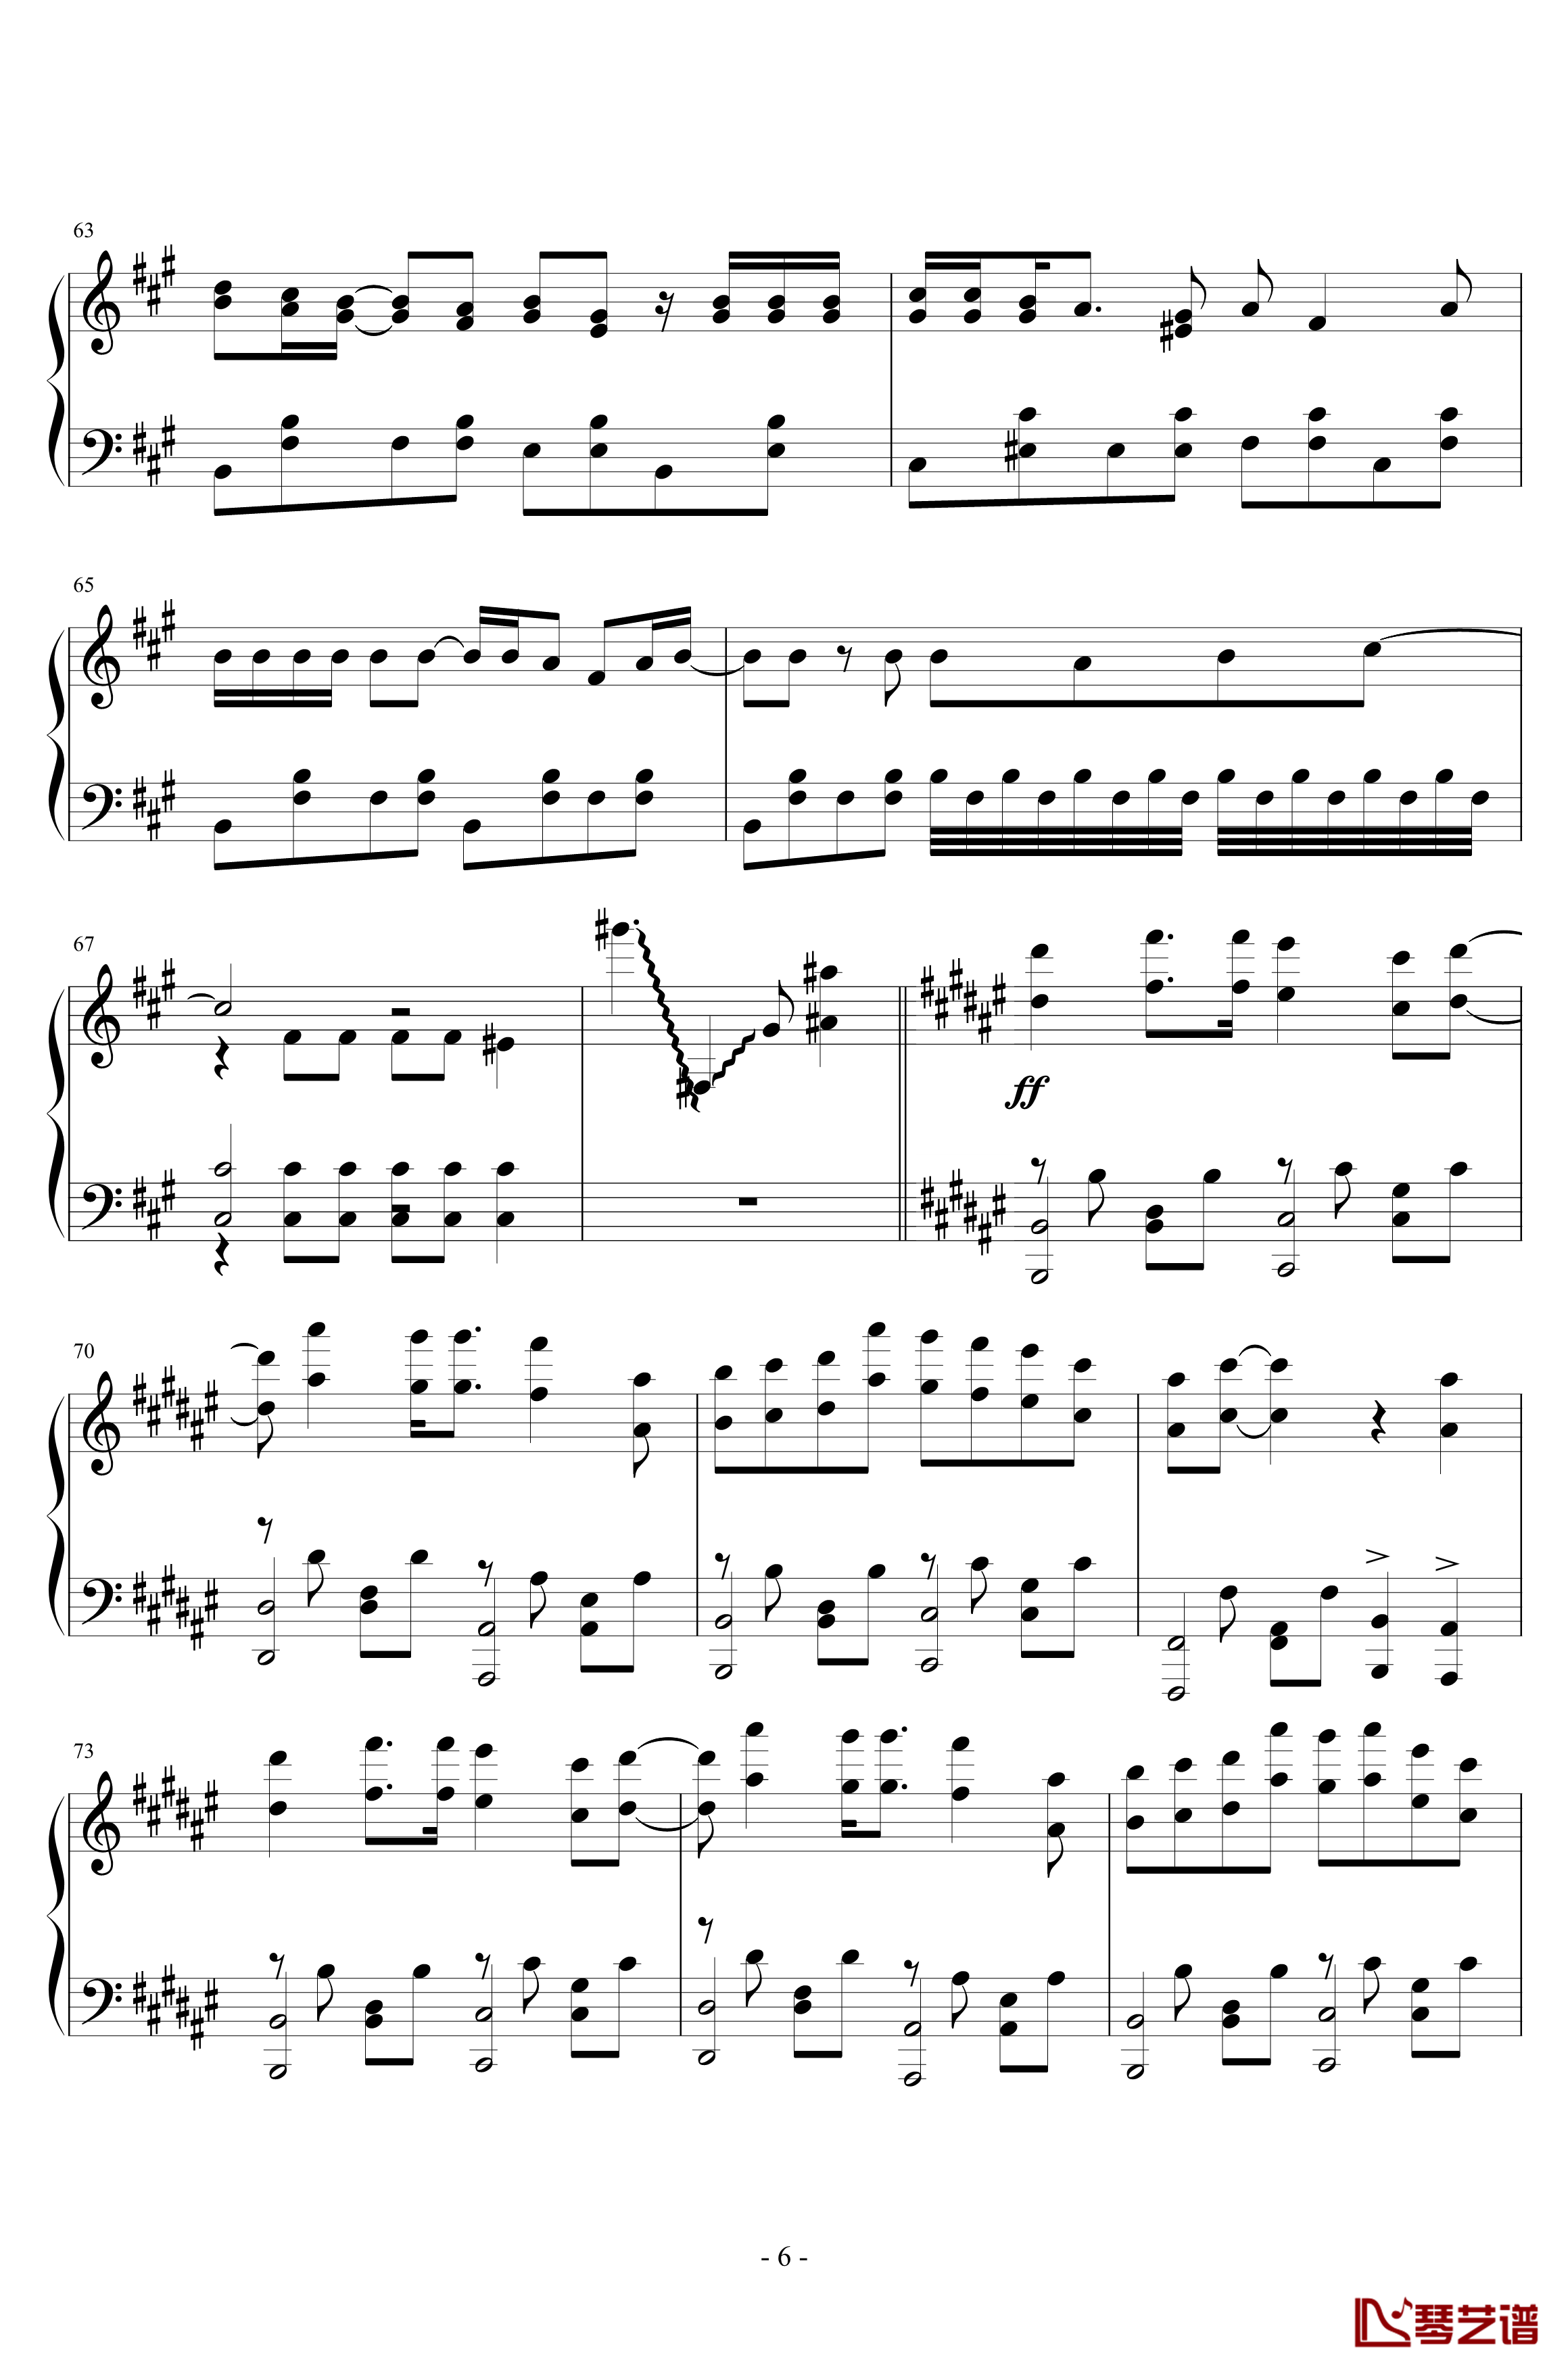 SNOBBISM钢琴谱 -Neru6